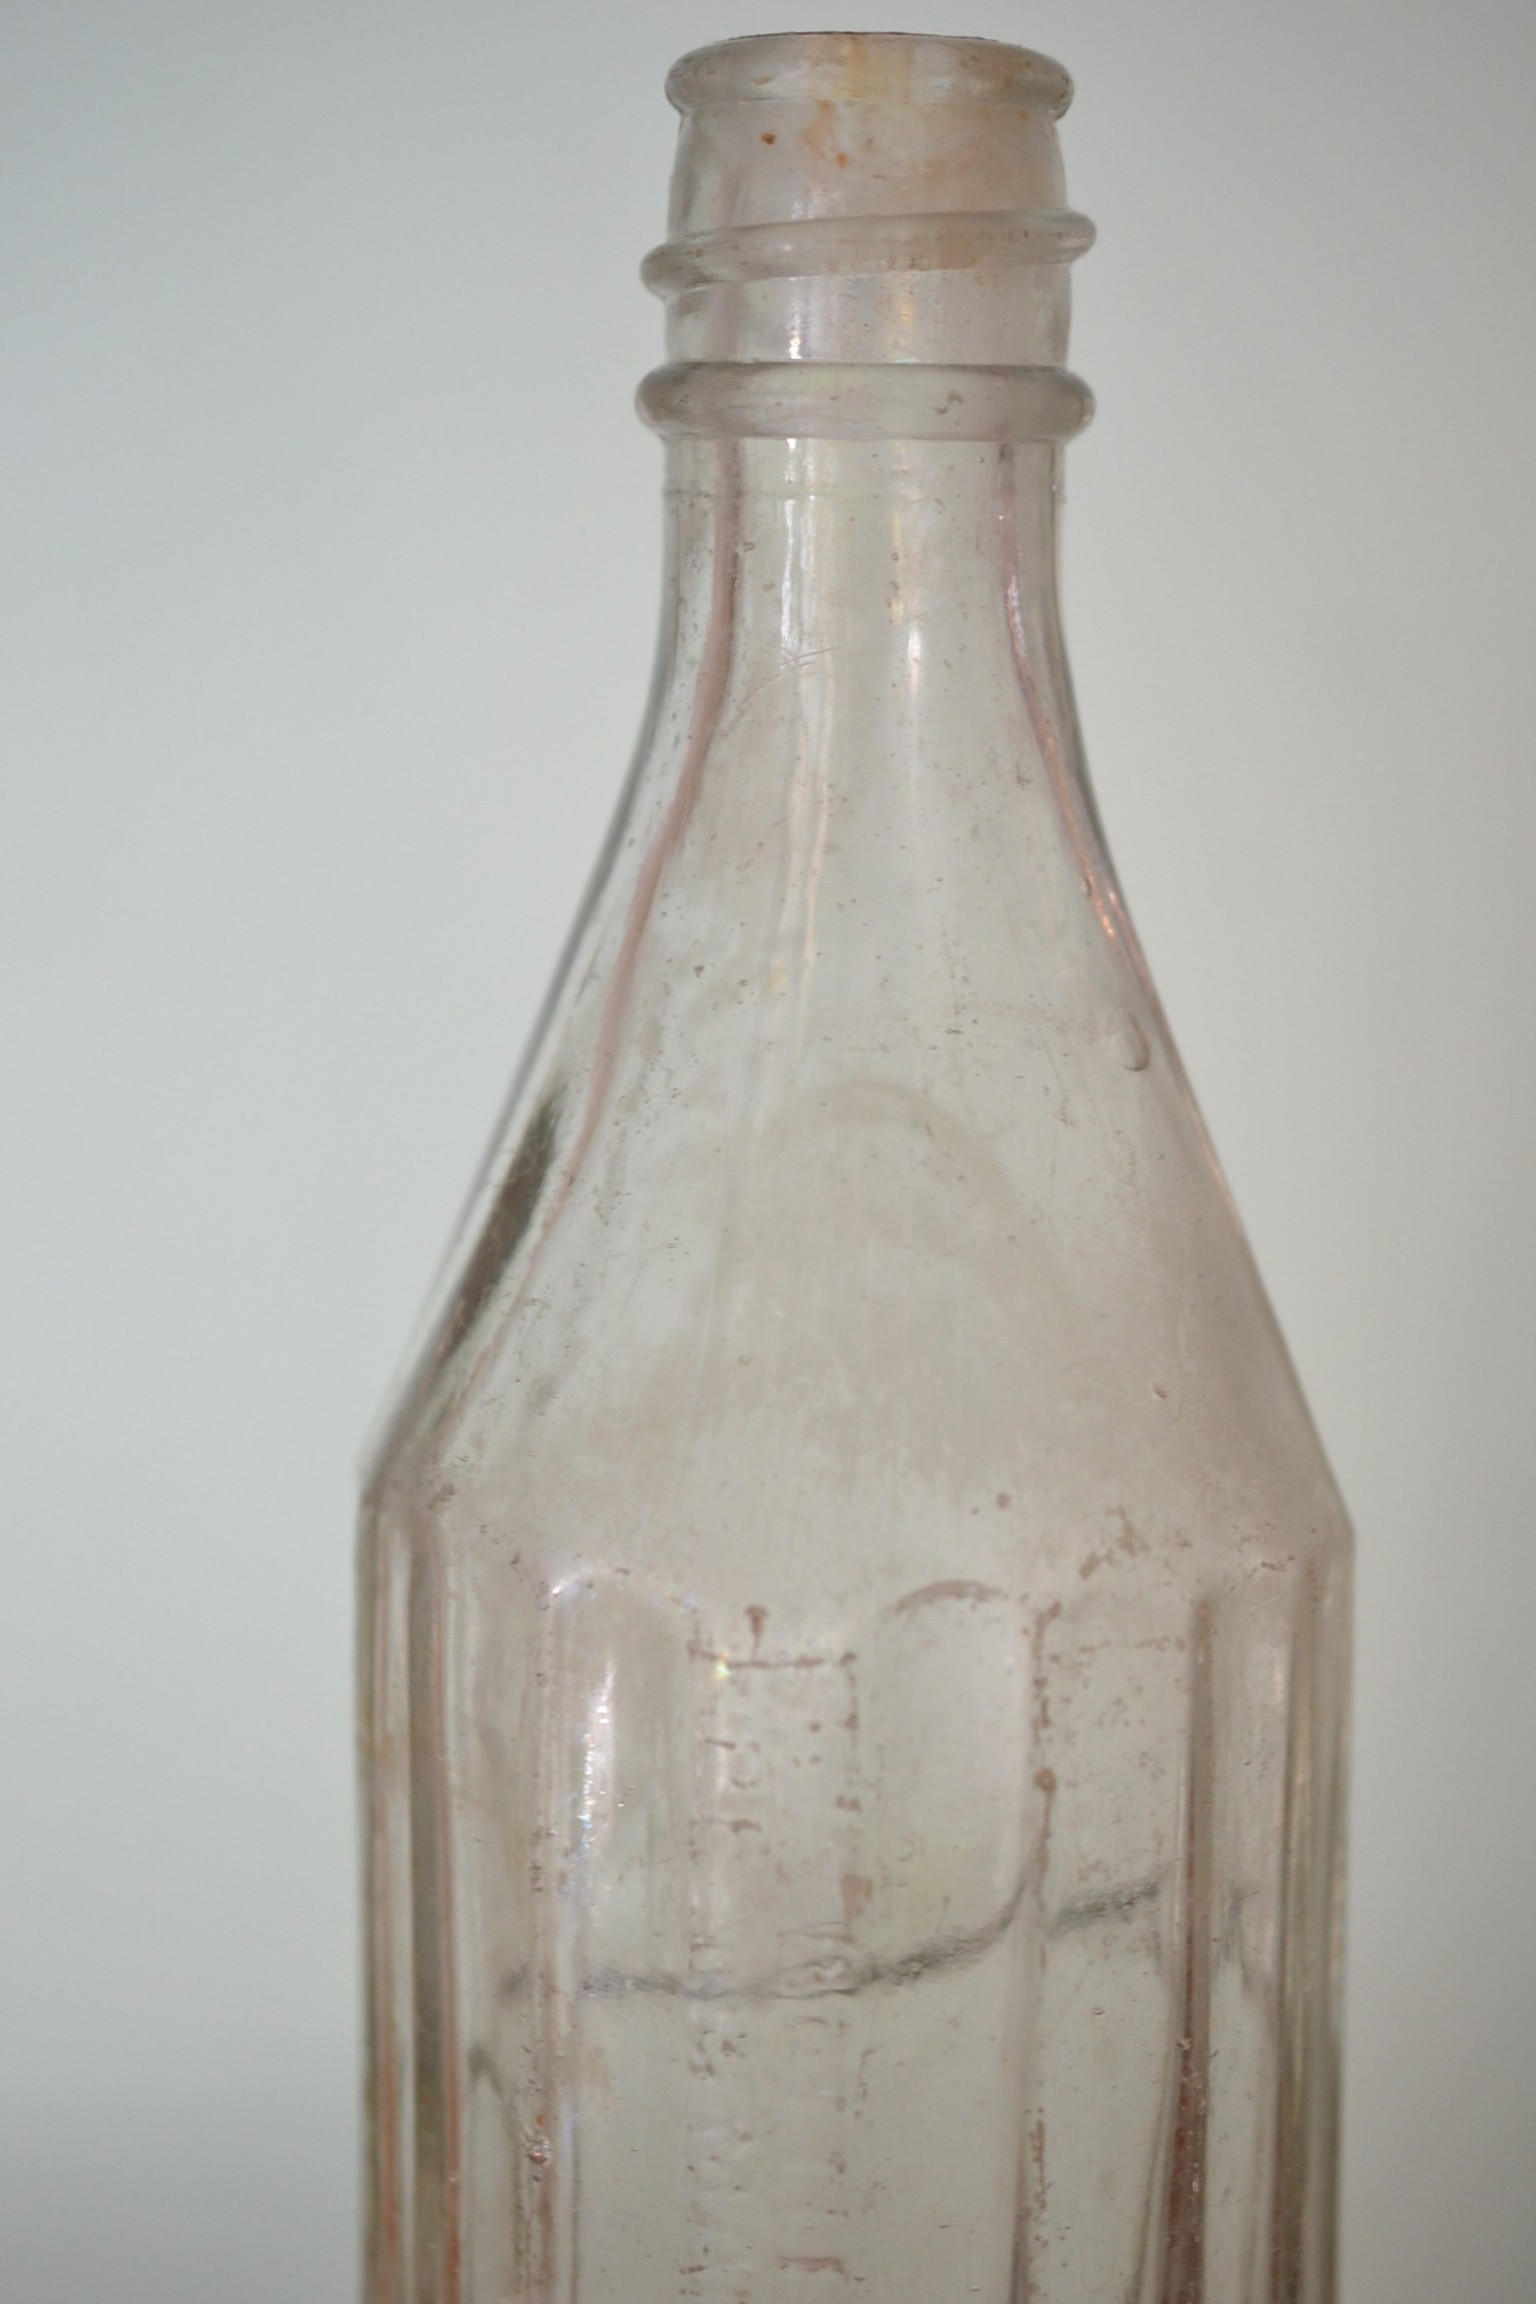 Antique Rosella bottle glass bottle Reg No 2970 OT